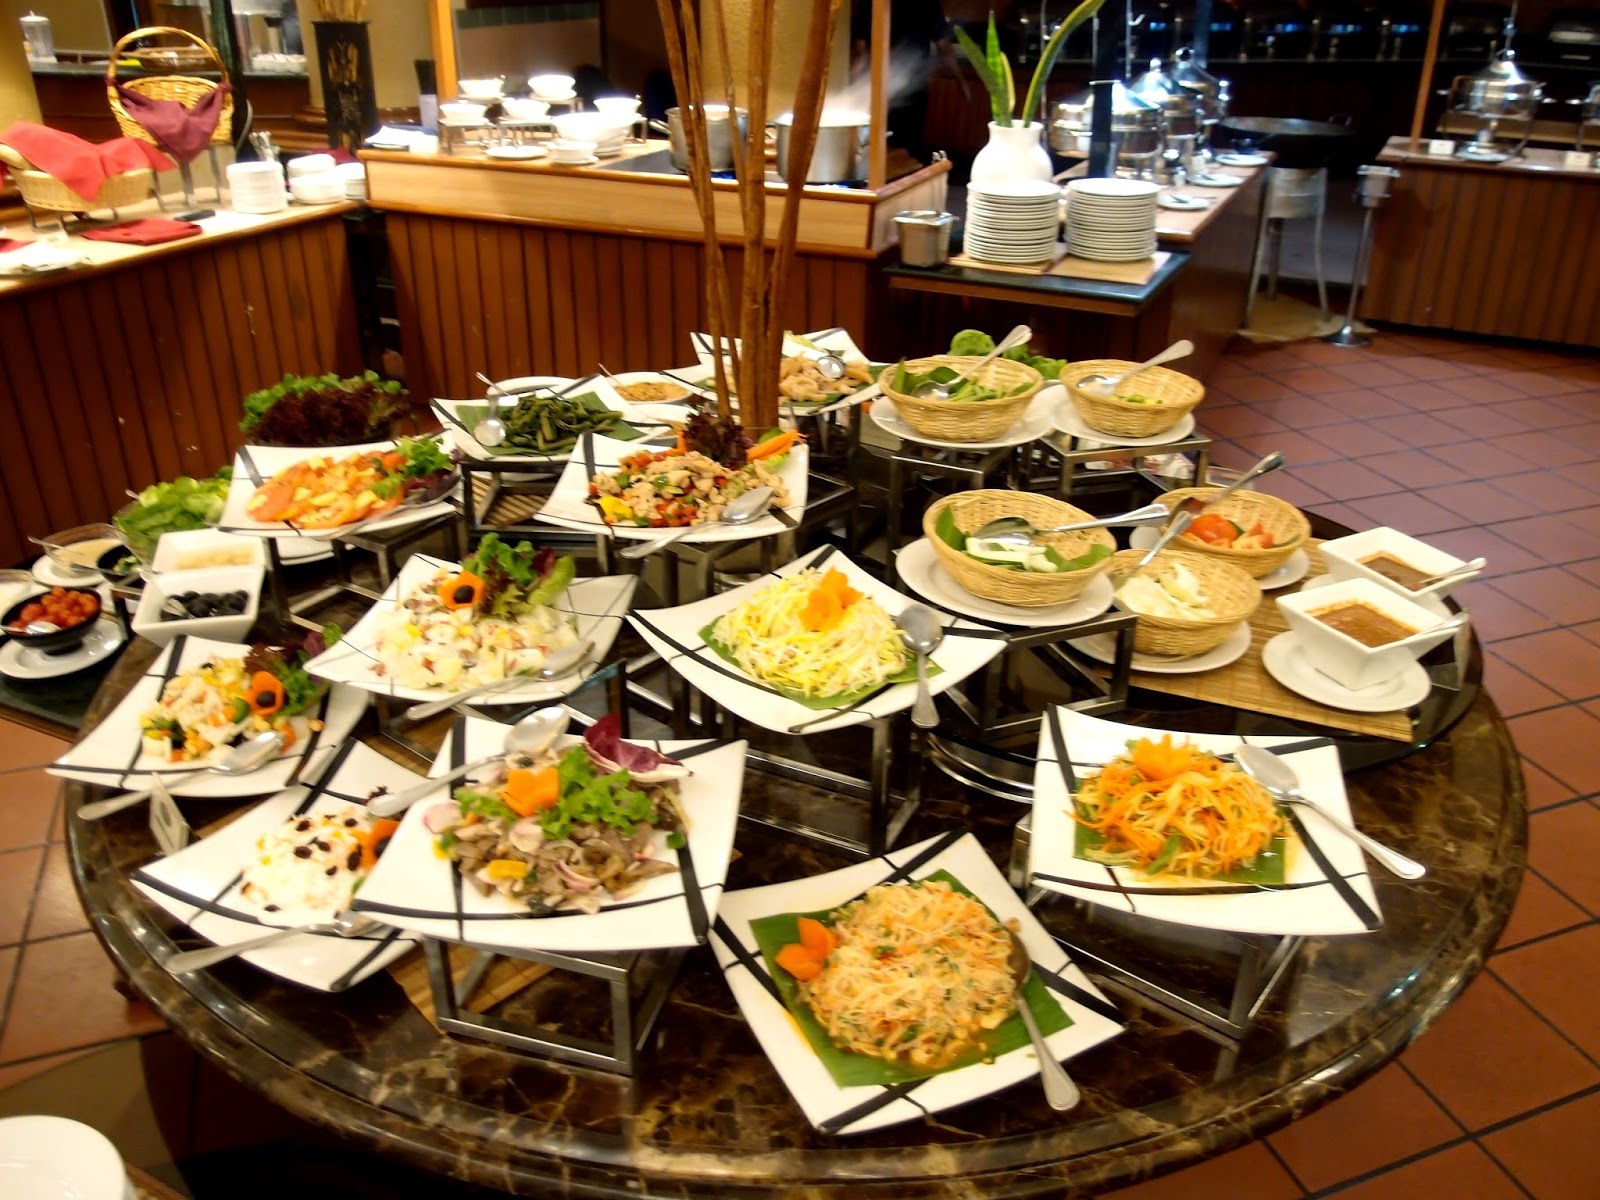 Follow Me To Eat La - Malaysian Food Blog: Palm Garden Hotel - Thai